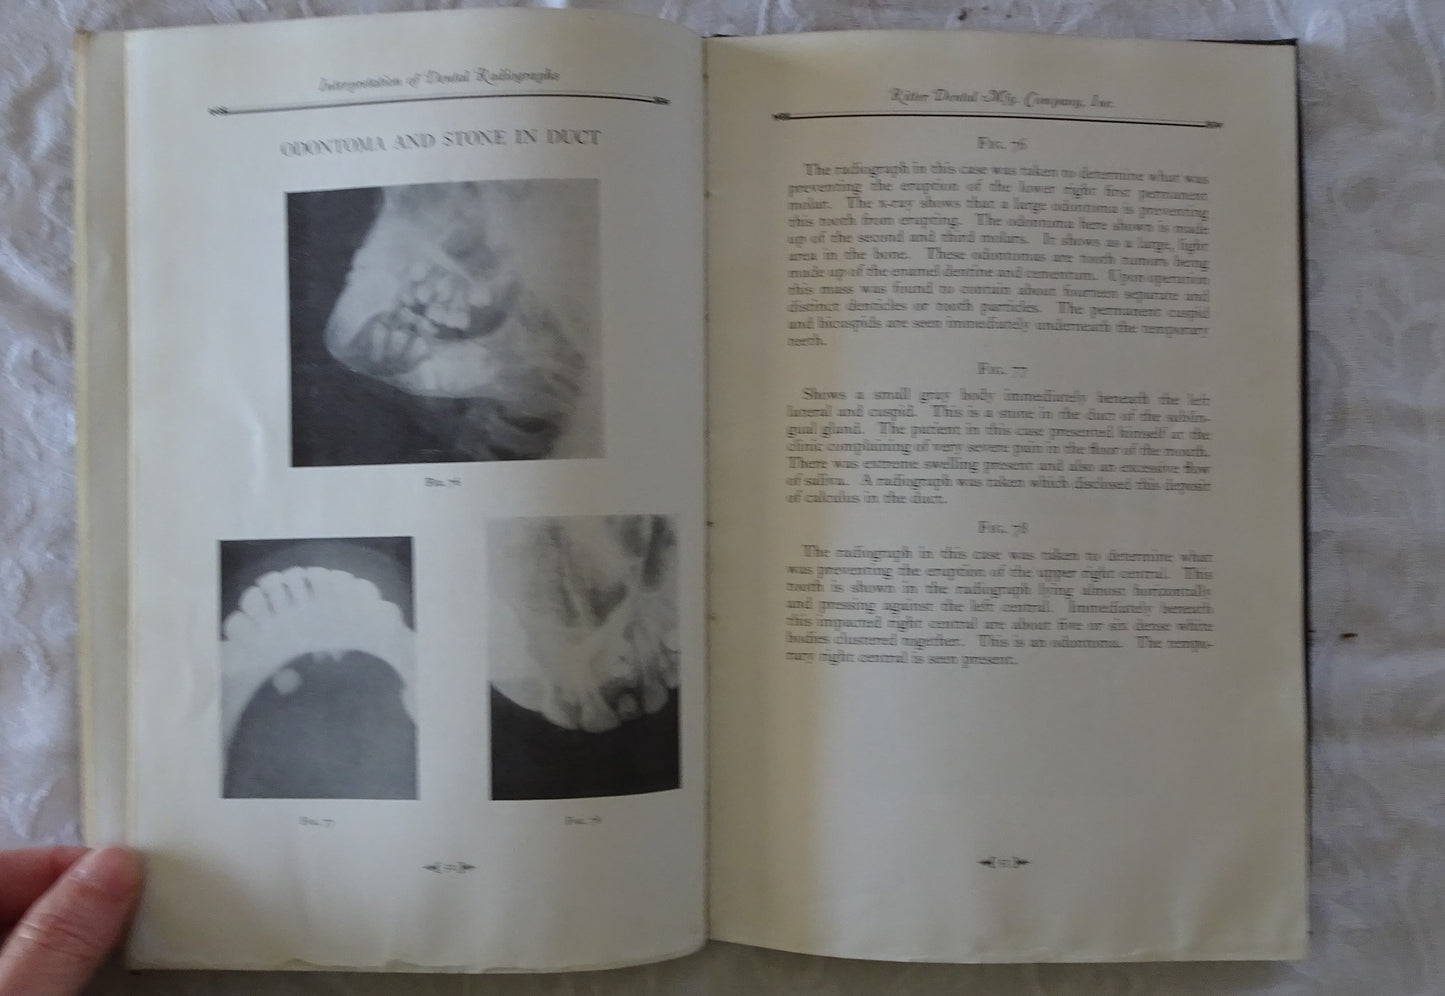 Interpretation of Dental Radiographs by A. L. Greenfield